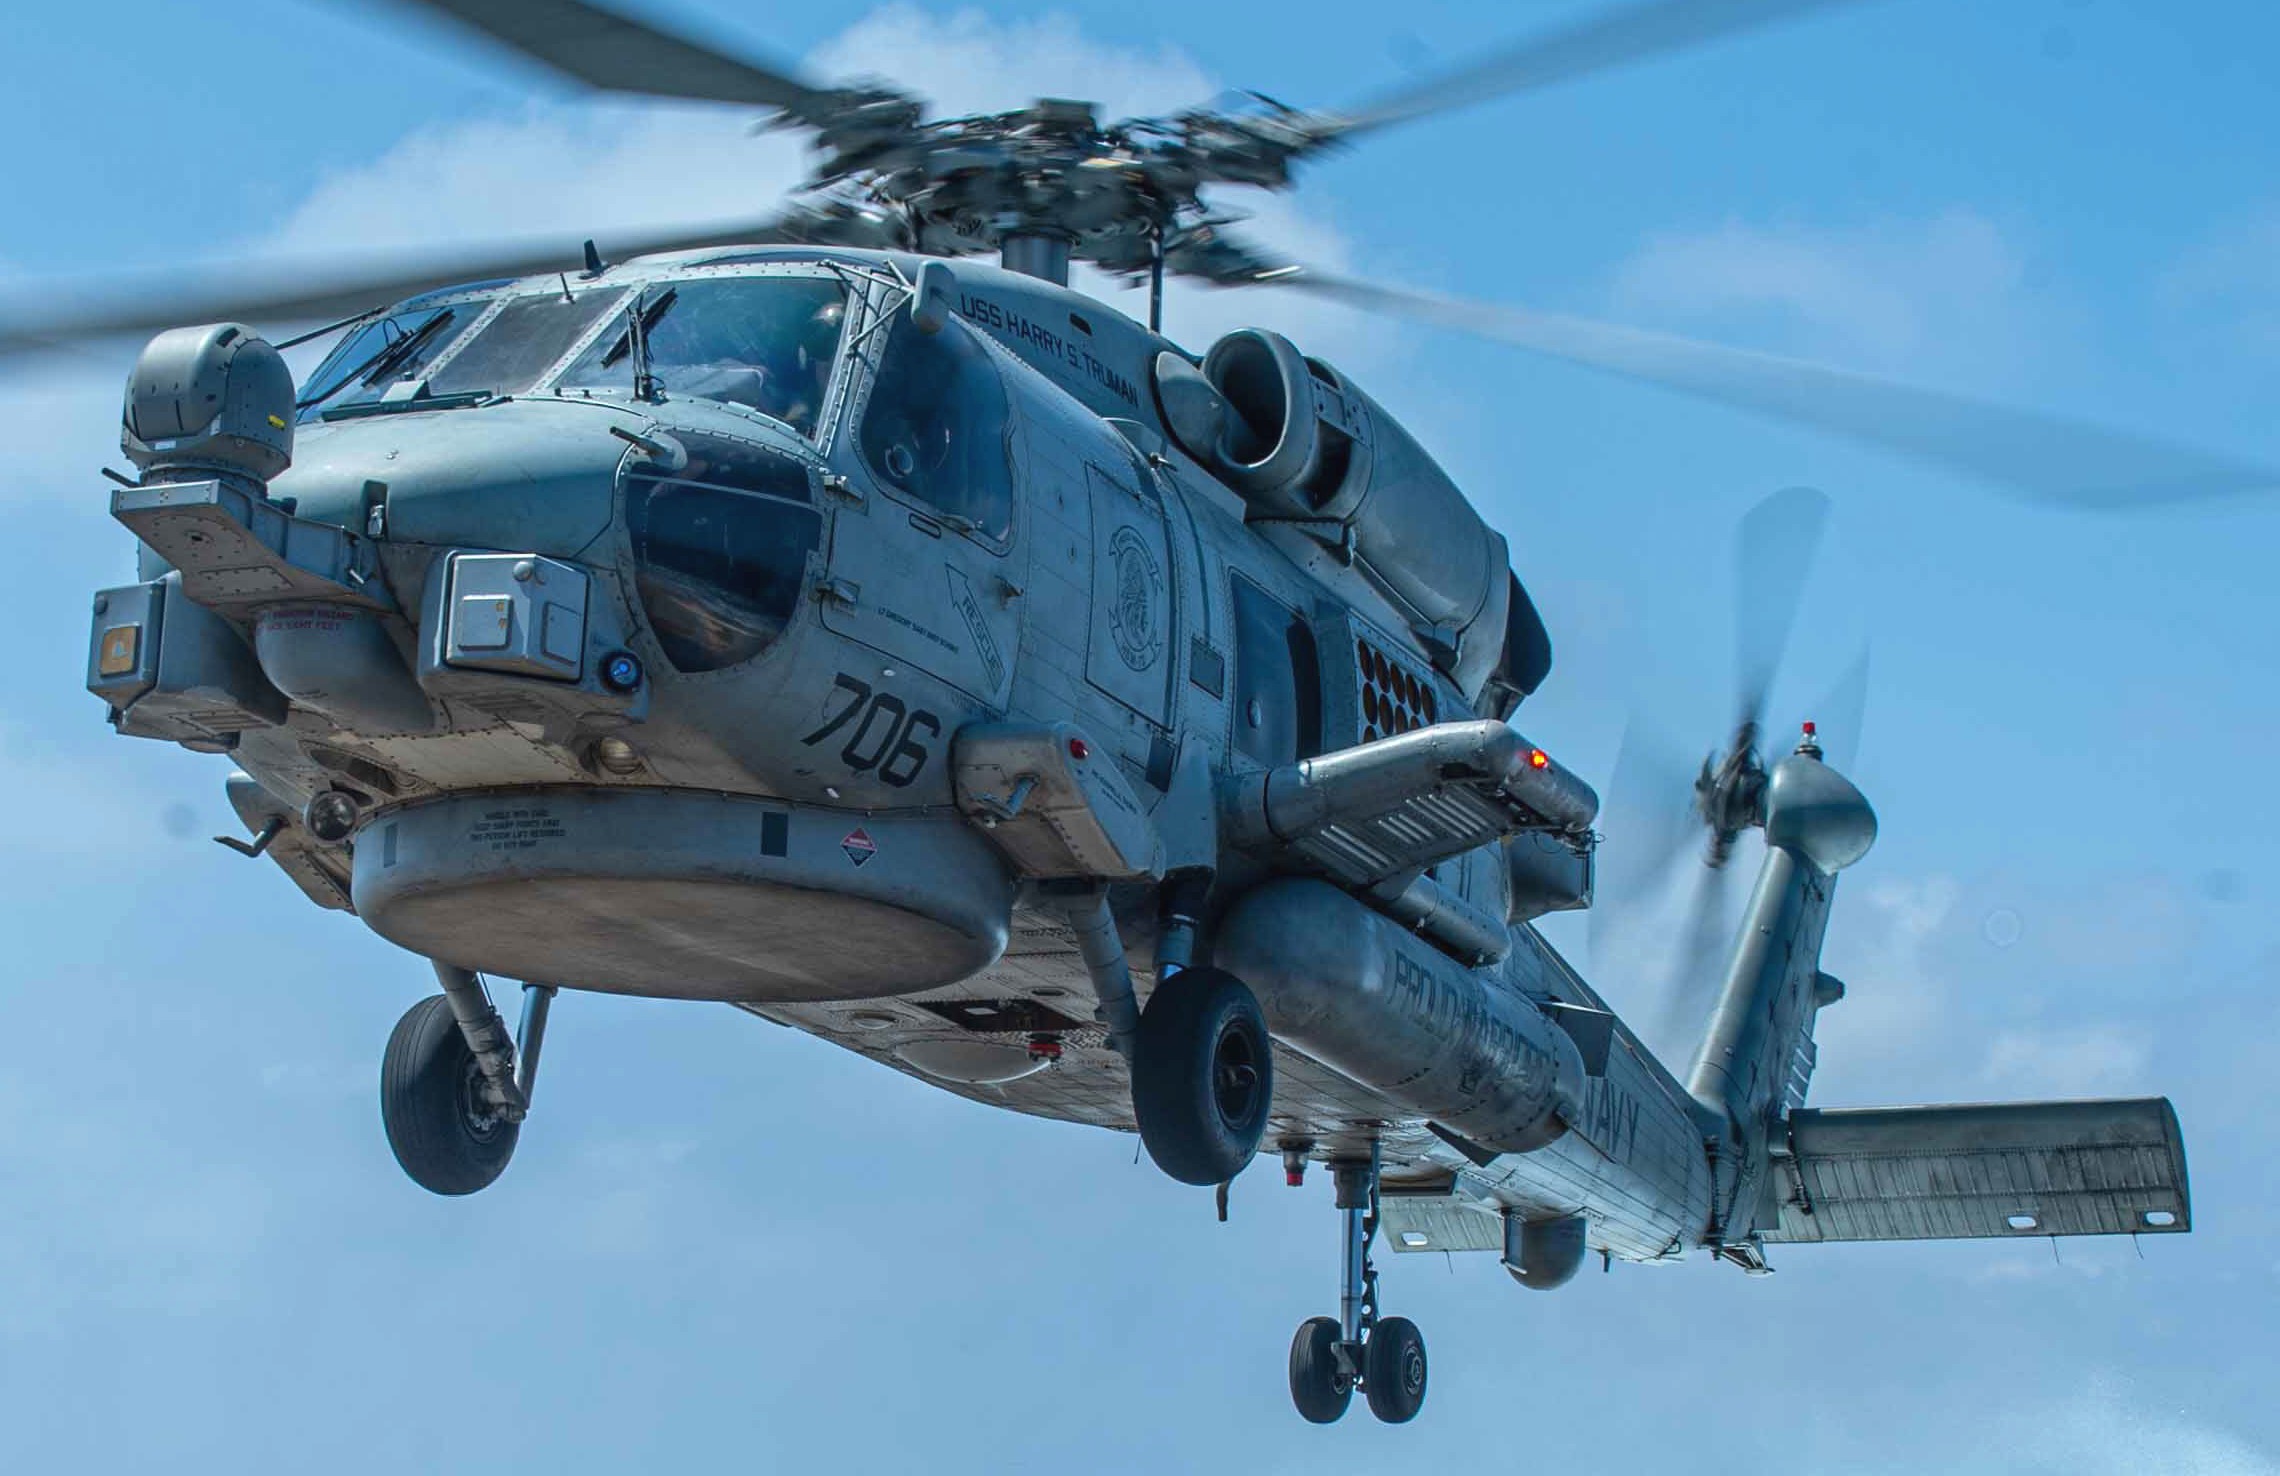 hsm-72 proud warriors helicopter maritime strike squadron mh-60r seahawk carrier air wing cvw-1 ddg-109 uss jason dunham 68